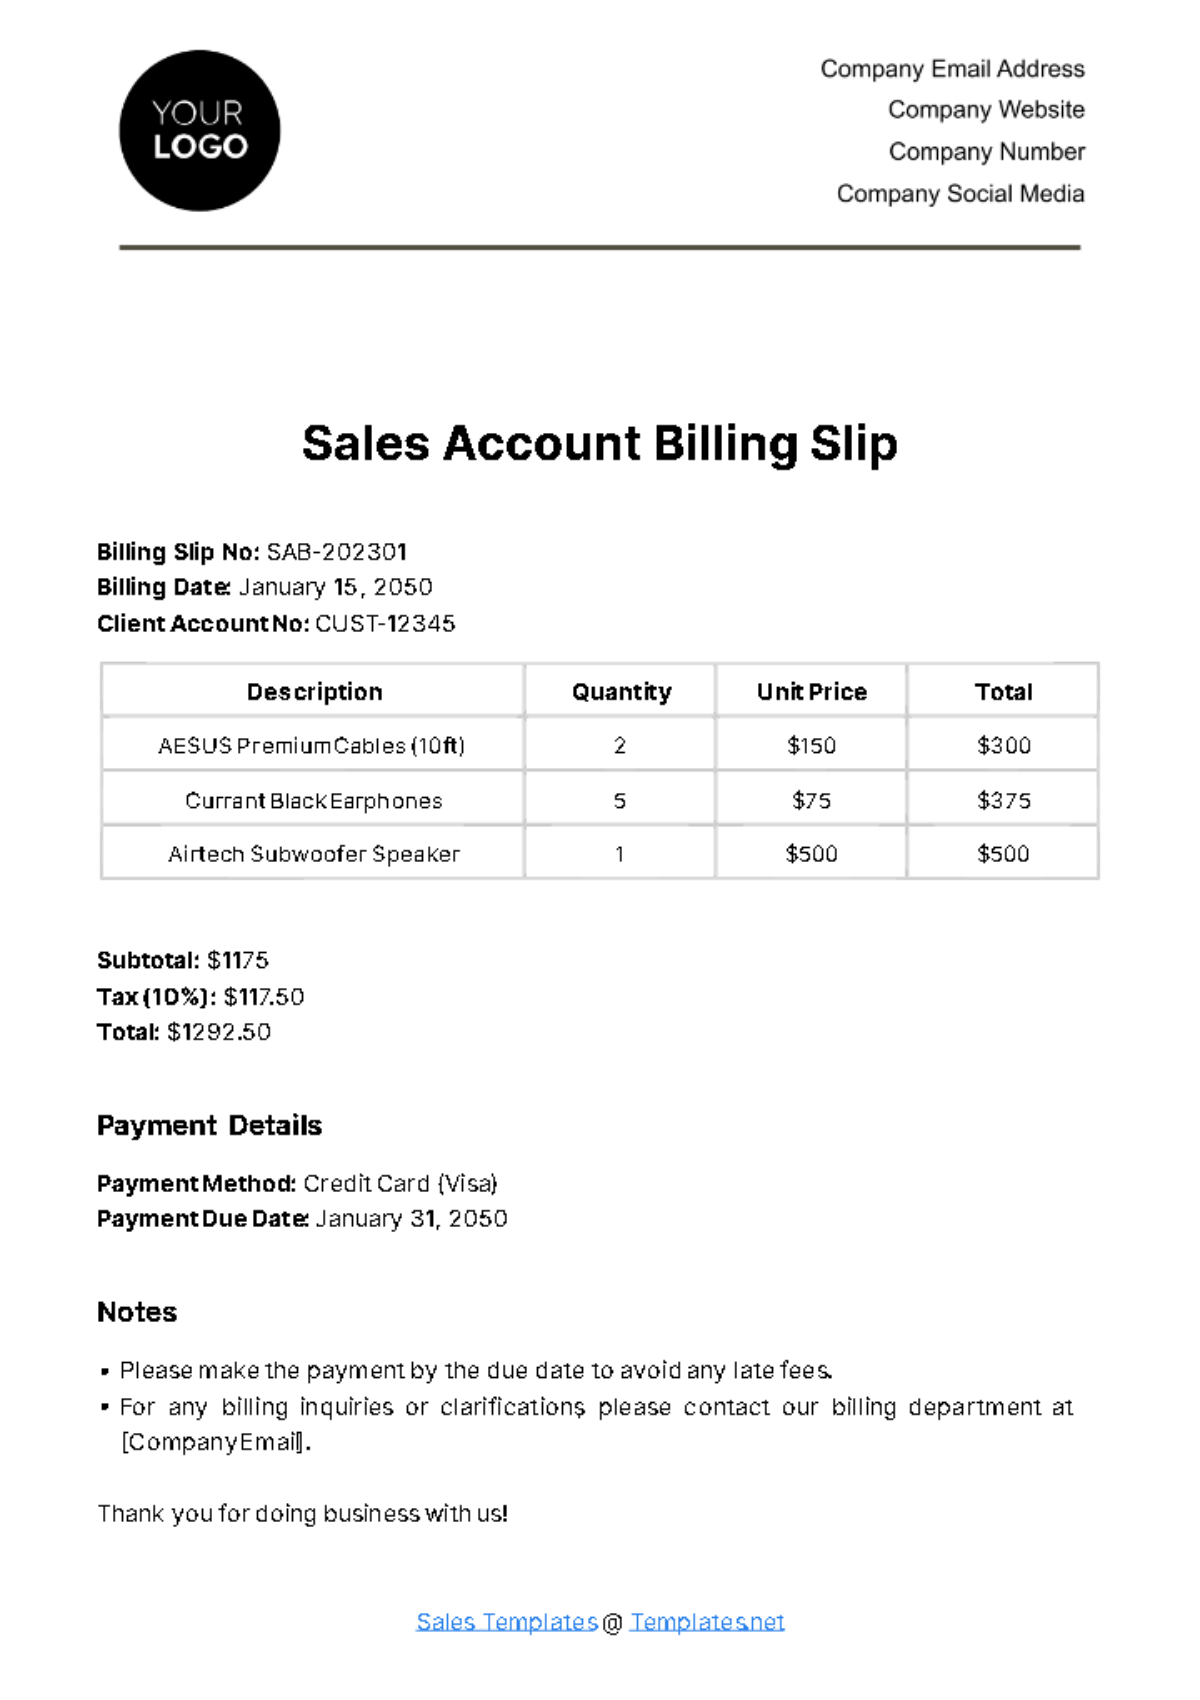 Sales Account Billing Slip Template